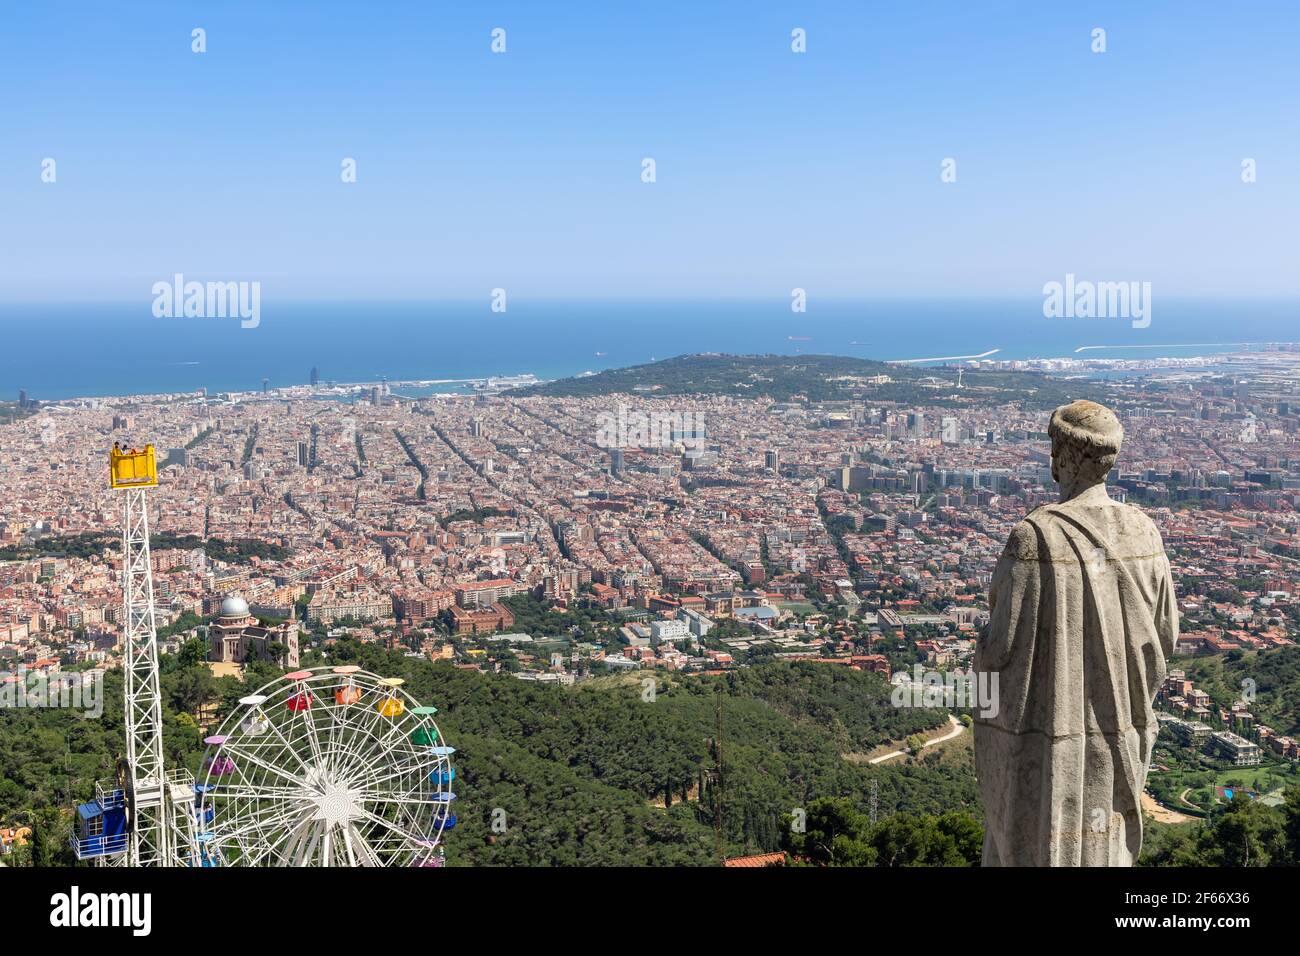 Looking over Barcelona from Tibidabo hill. Barcelona, Spain Stock Photo